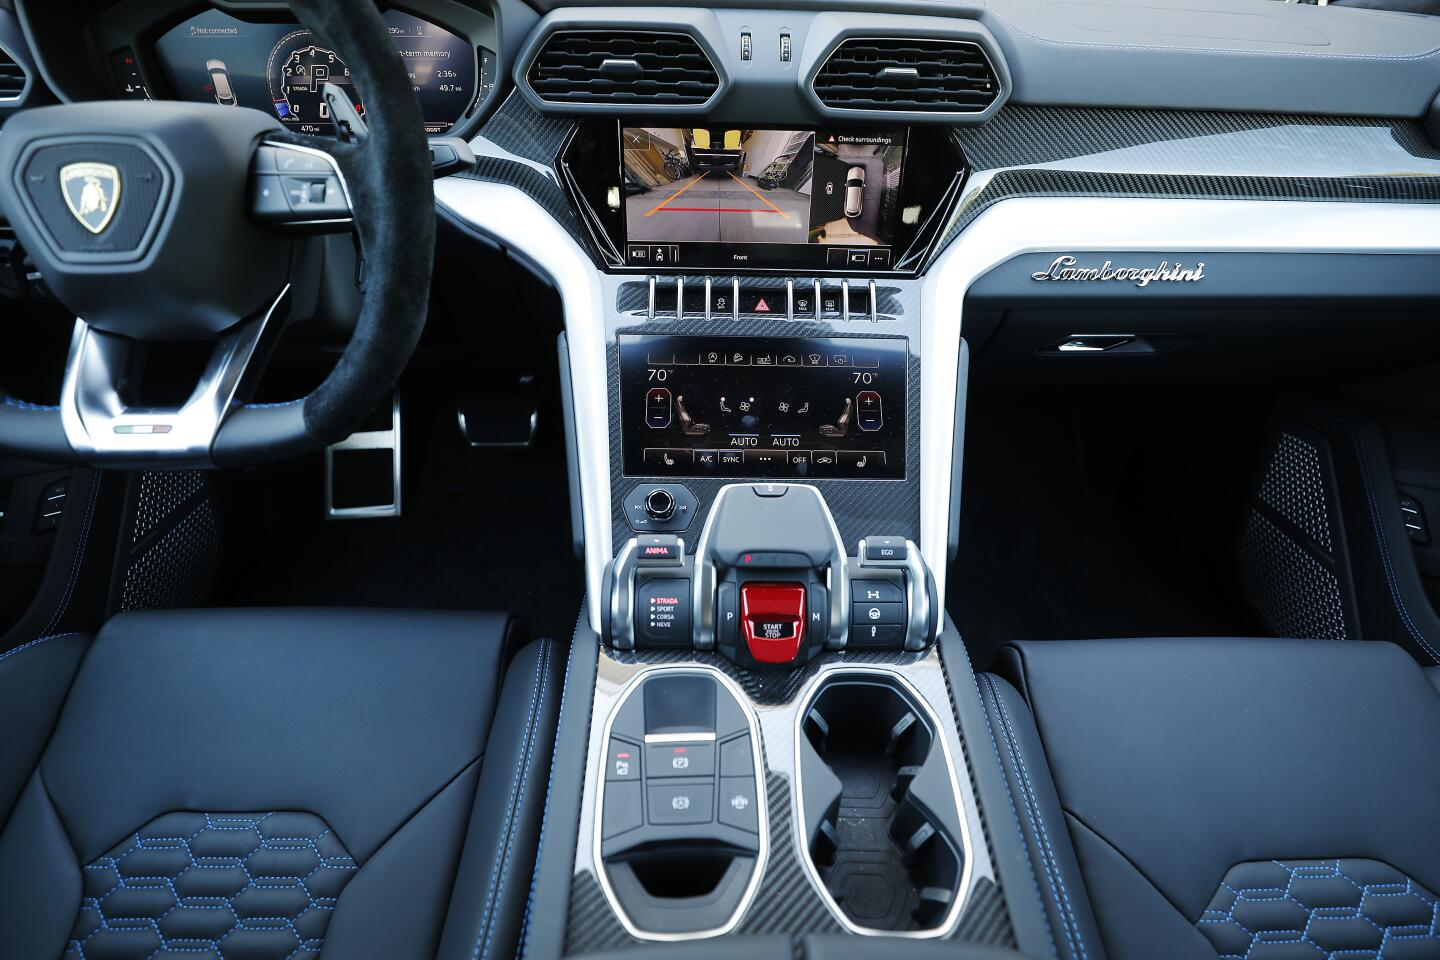 The cockpit of the Lamborghini Urus.